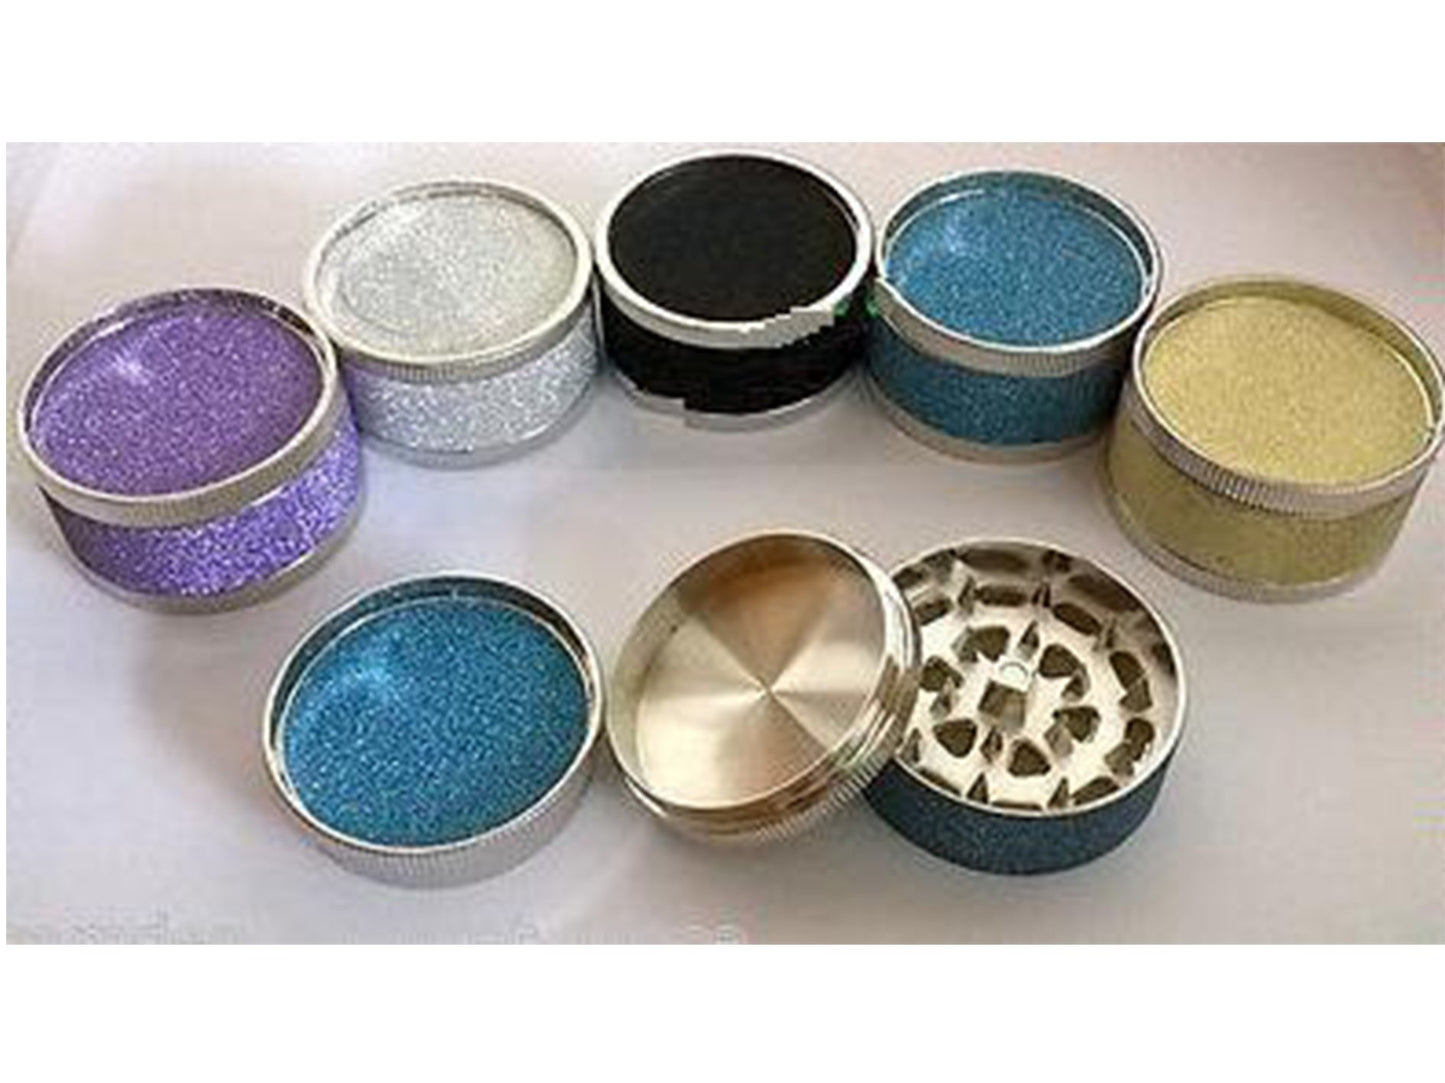 Tobacco Grinder 3 Part Metal Shiny Design Assorted Colours (Gri021) - VIR Wholesale